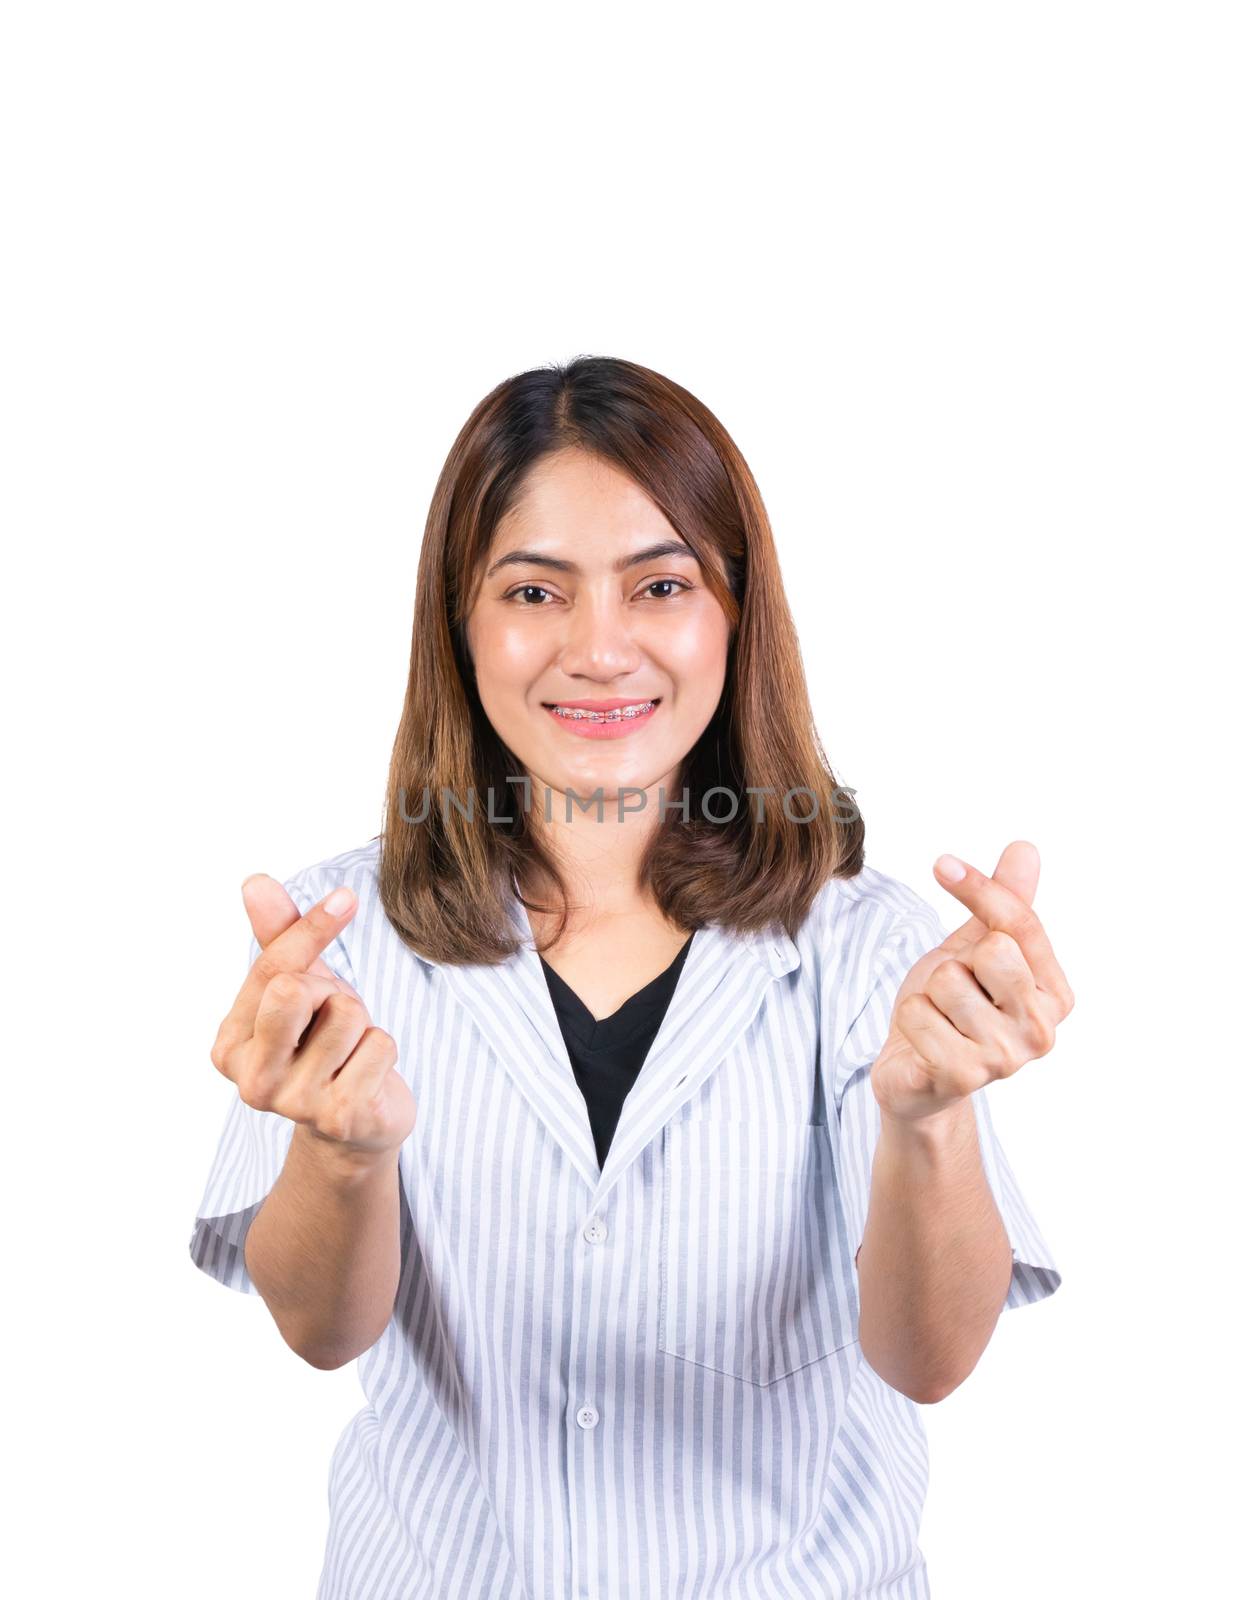 woman dental braces smile showing mini heart sign on white by pramot